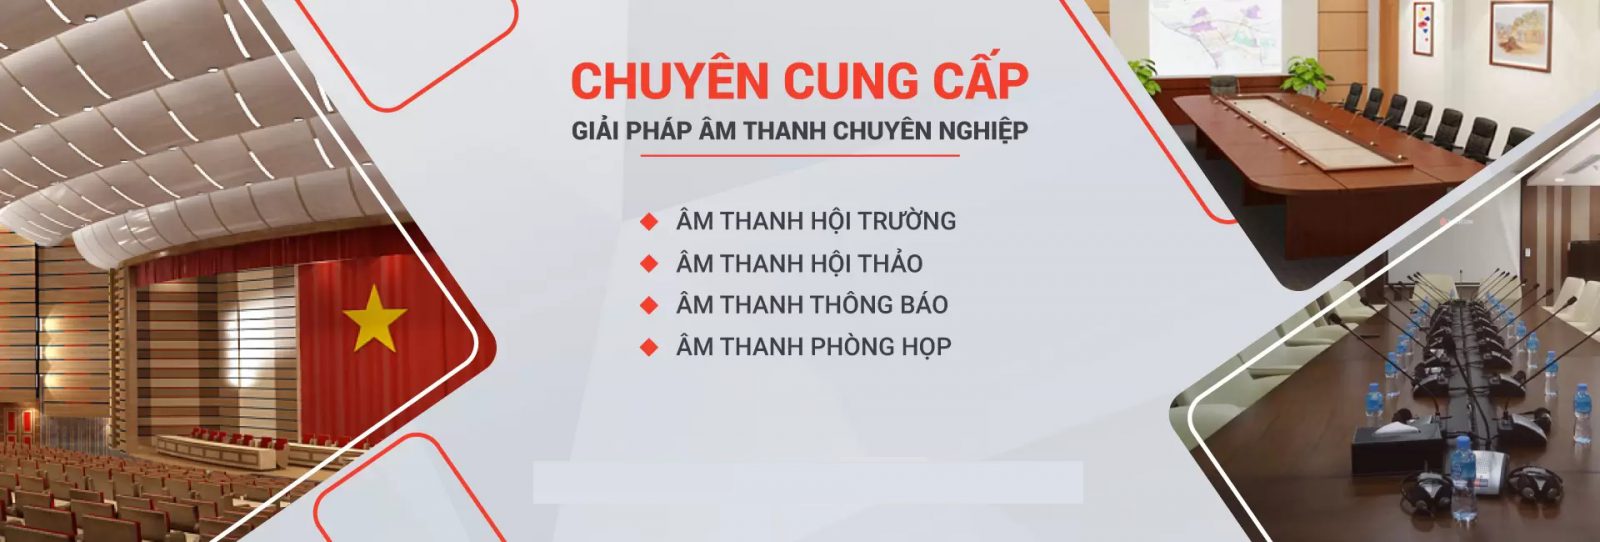 banner he thong dan am thanh hoi truong hoi thao 01